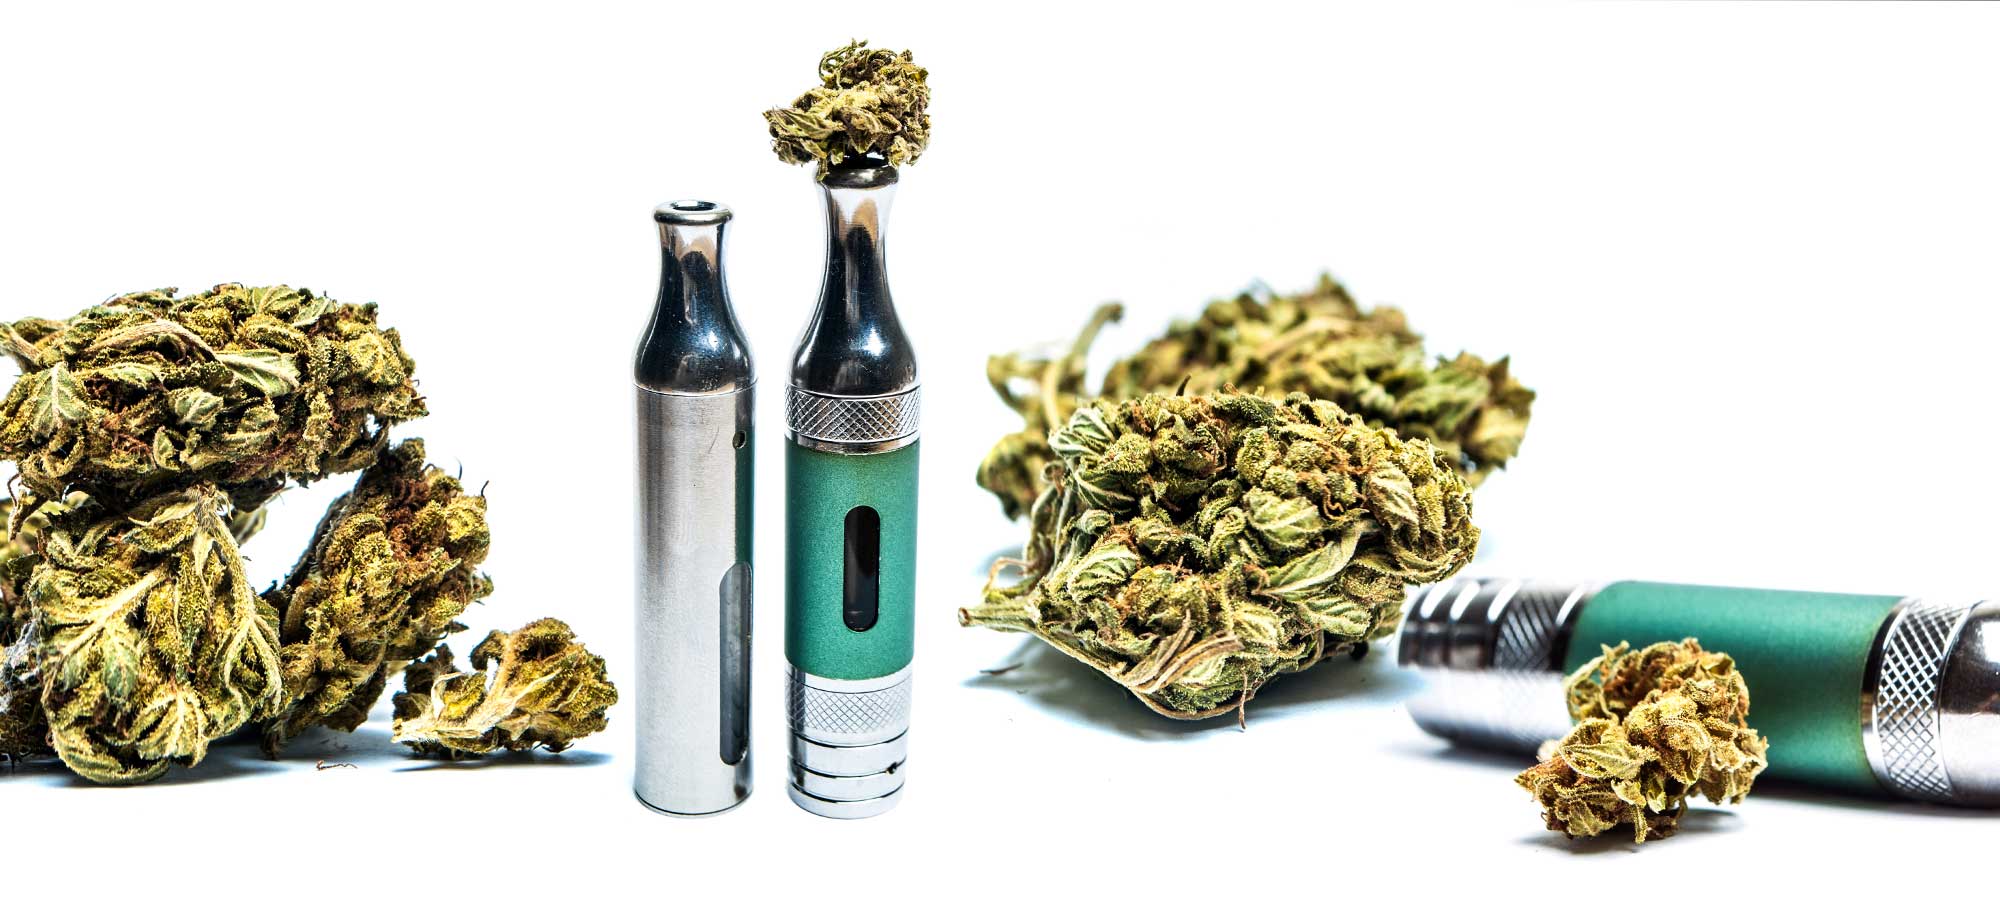 vaporizing cannabis